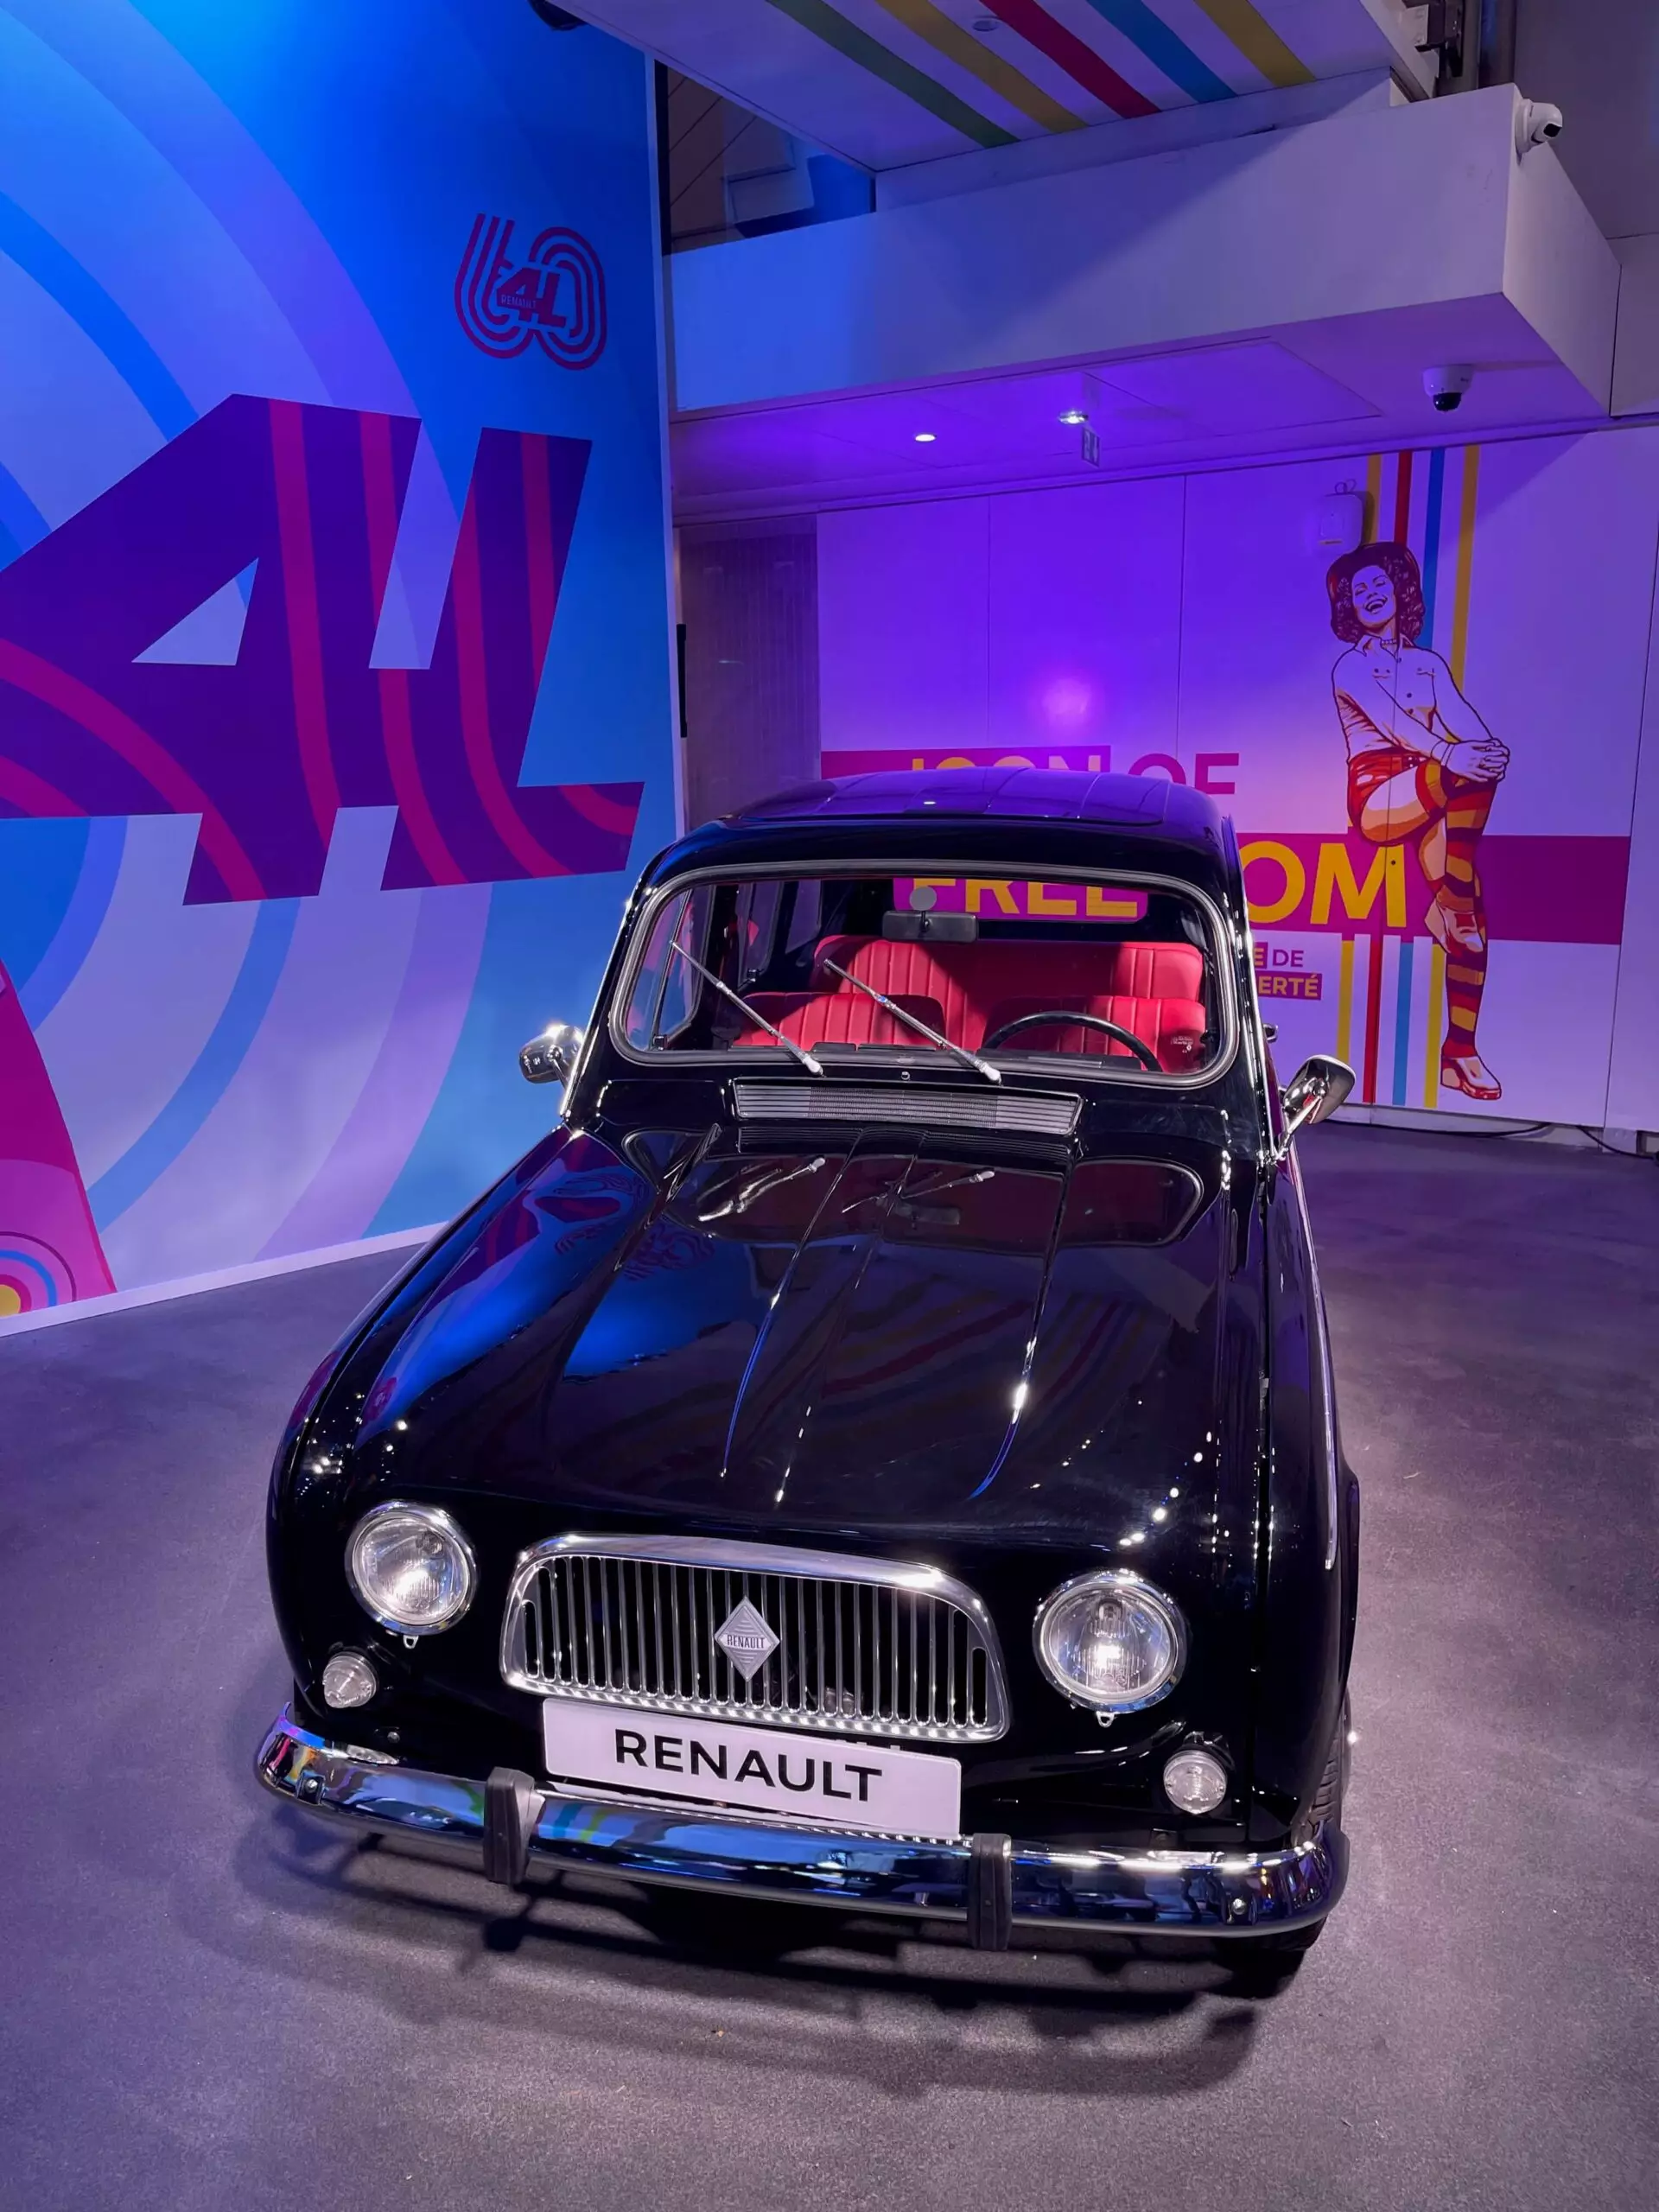 60 Jahre alter Renault 4L